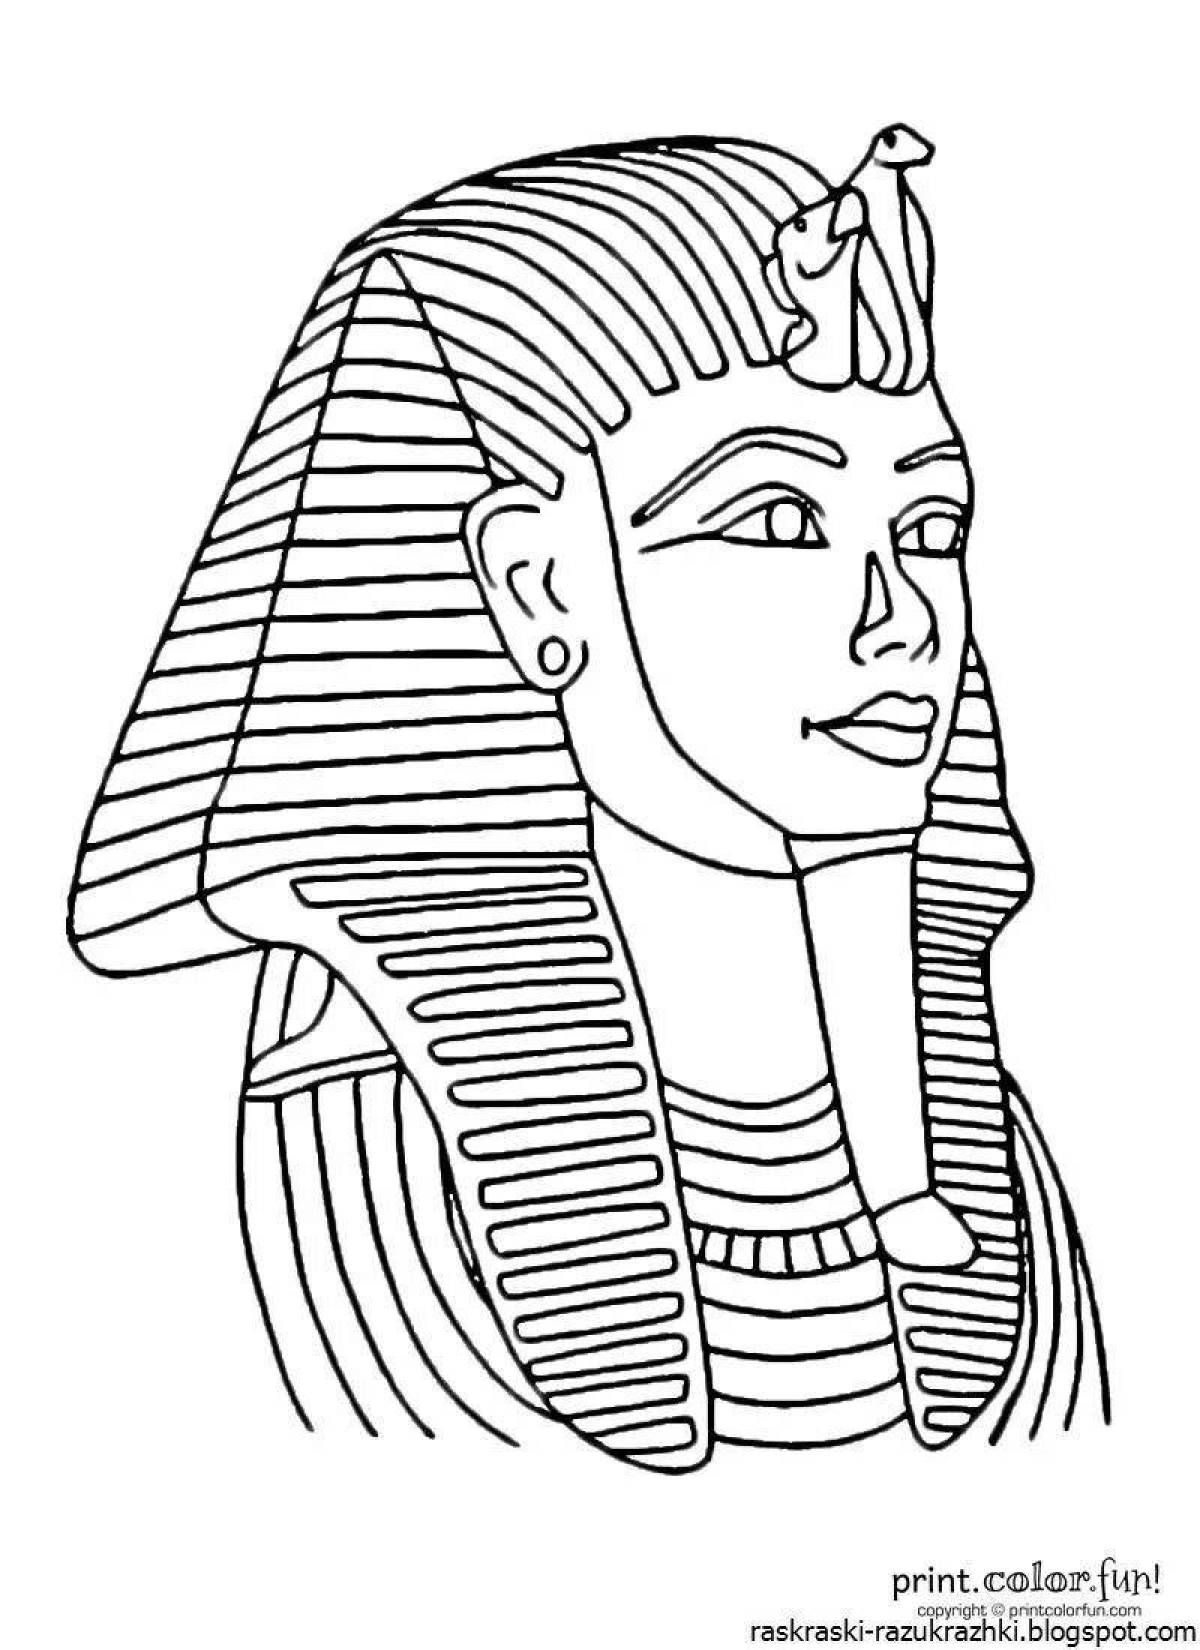 древний египет 5 класс